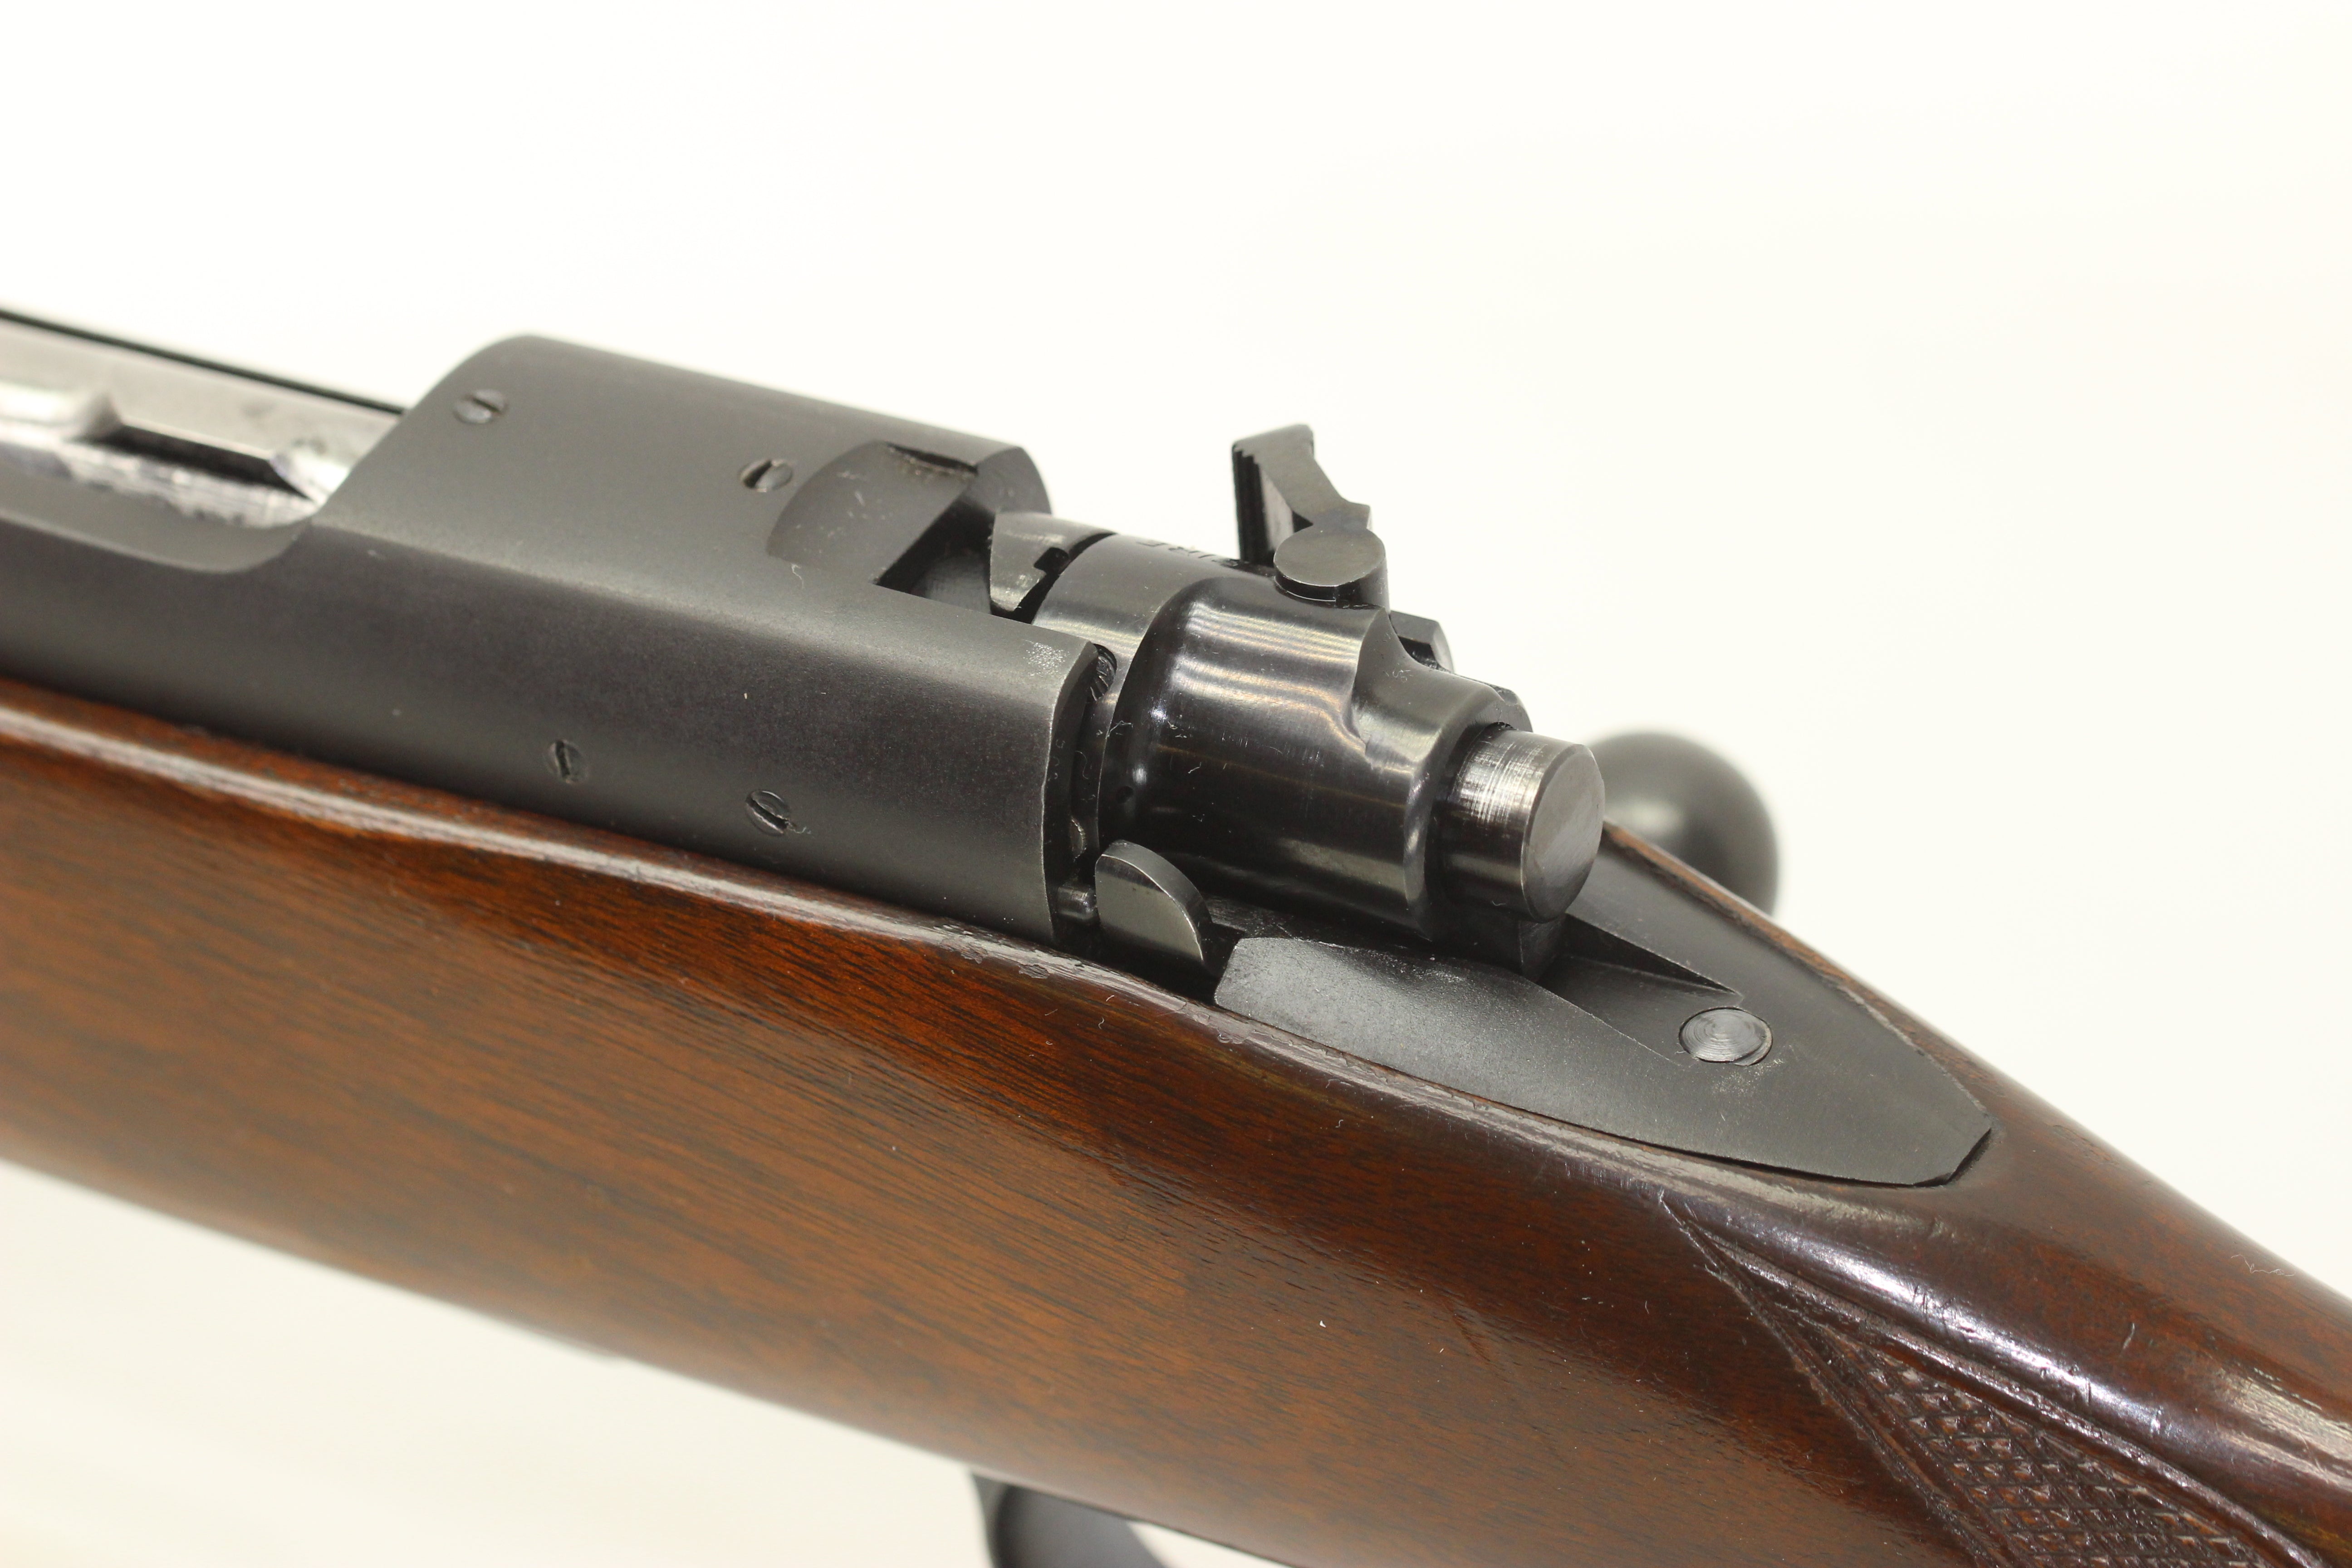 .338 Win Mag "Alaskan" Rifle - 1959